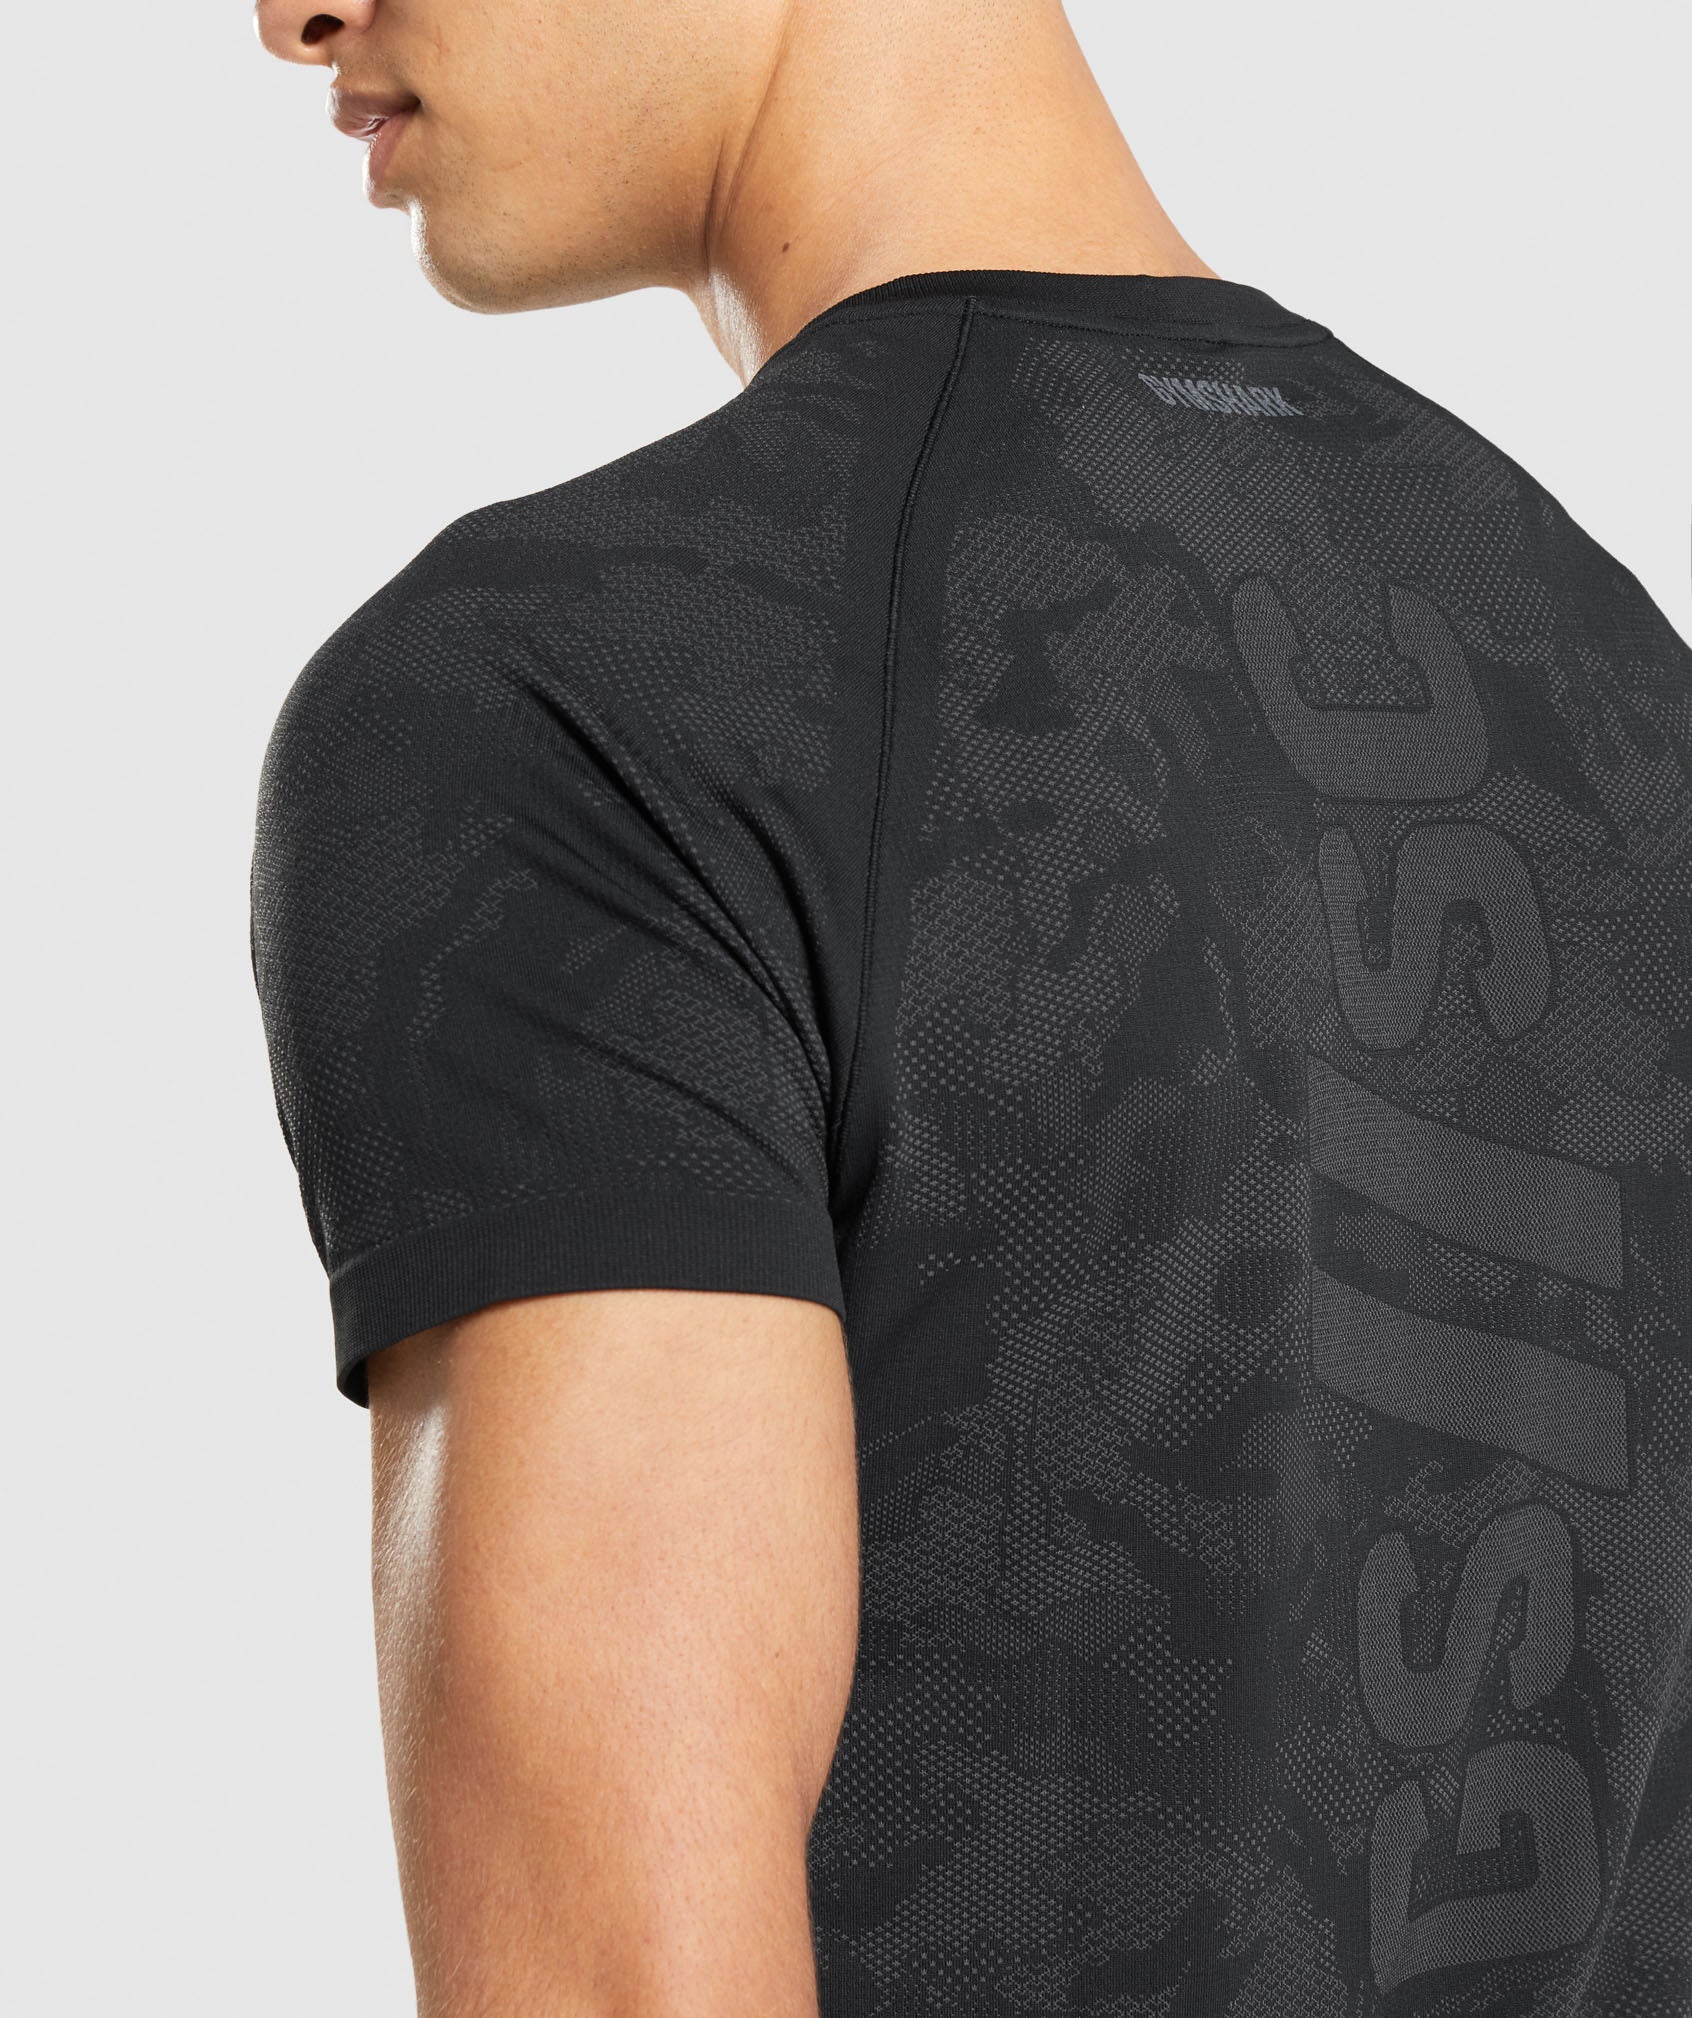 Gymshark//Steve Cook Seamless T-Shirt in Black/Graphite Grey